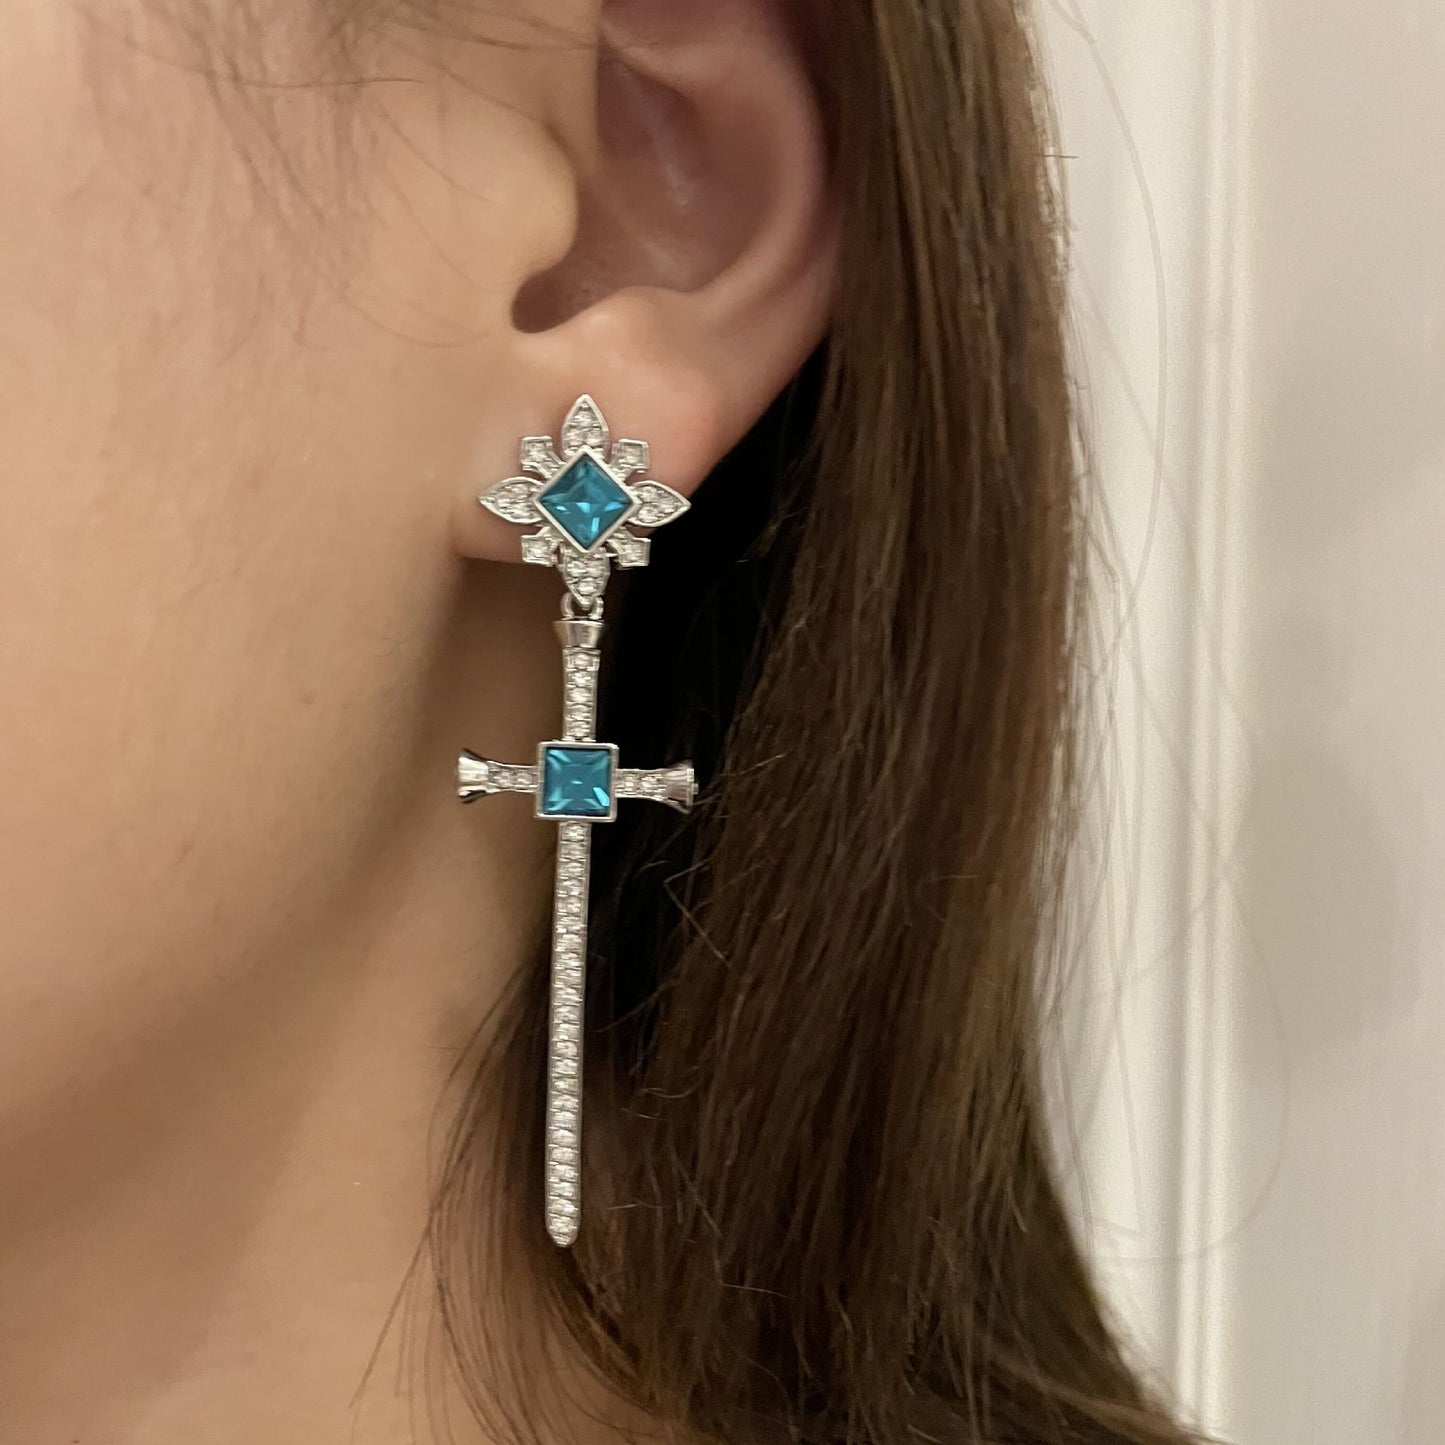 Hot Amazing Cross Pendant Blue Necklace Earring